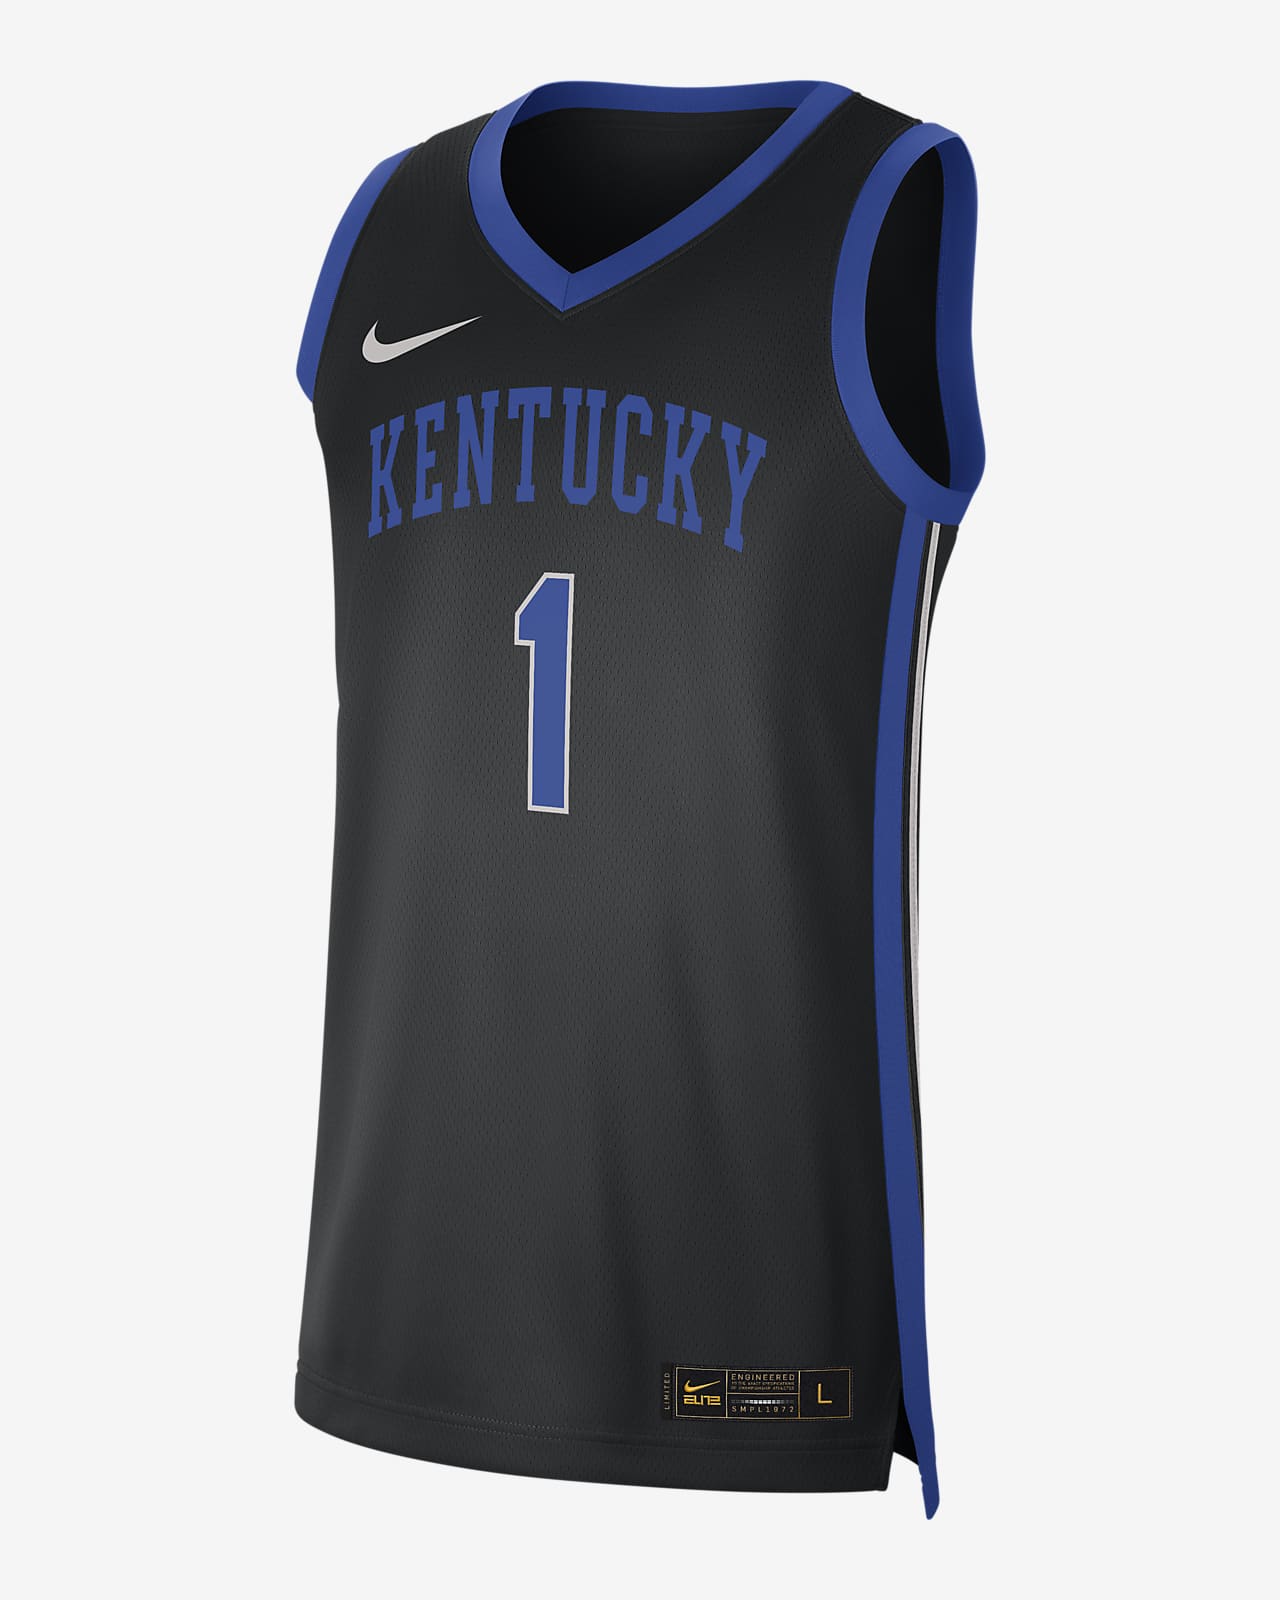 Nike College Dri-FIT (Kentucky) Men's Replica Basketball Jersey